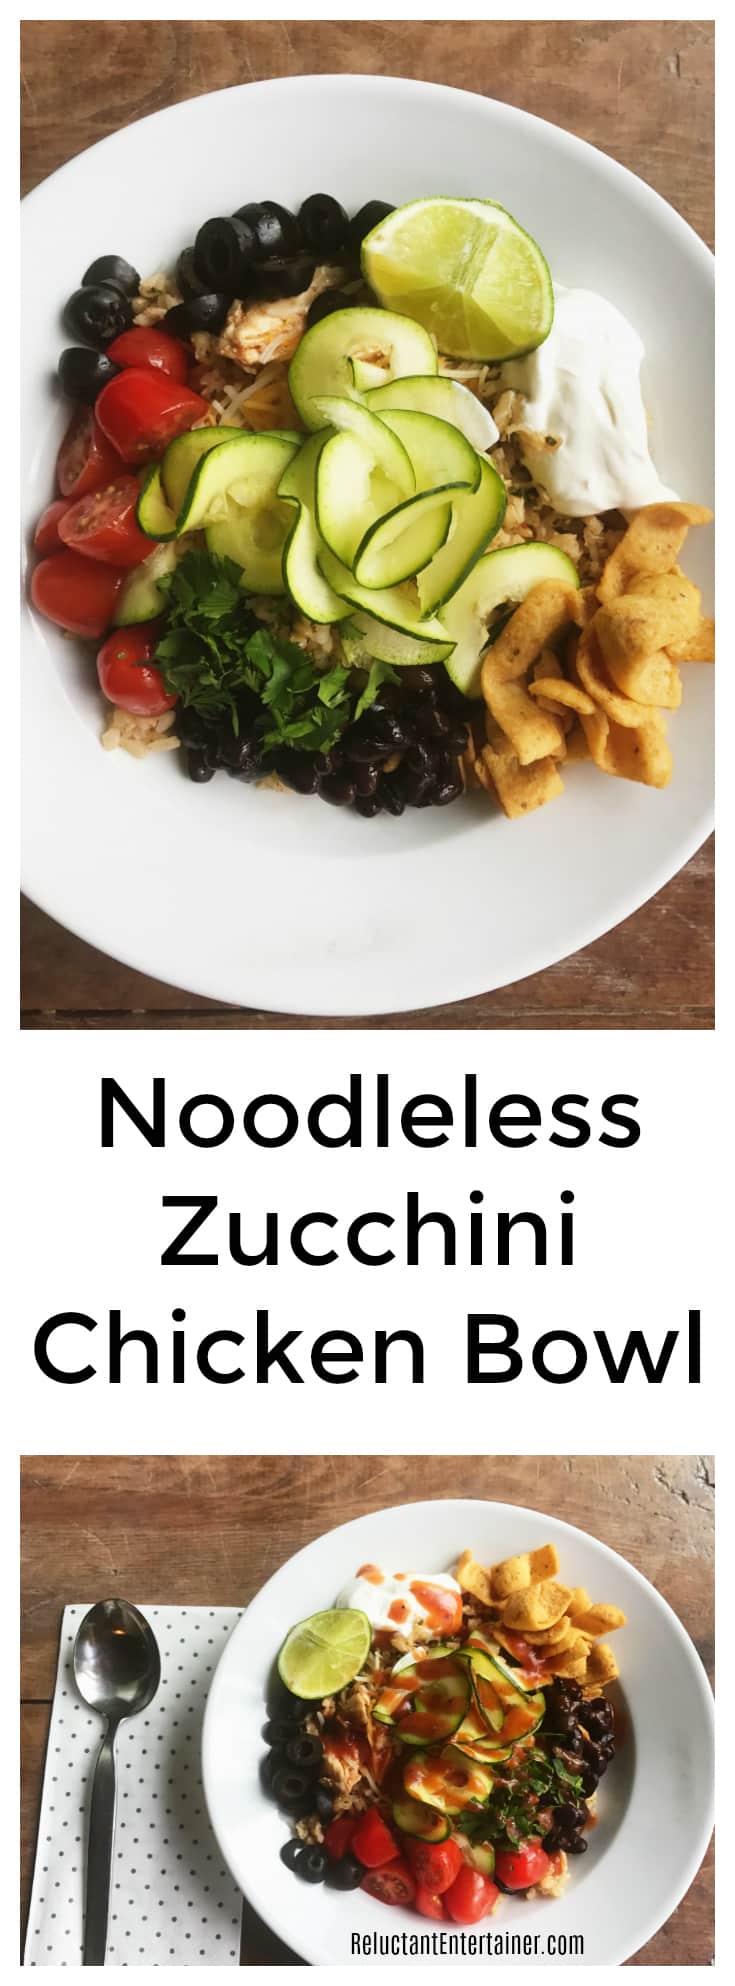 Noodleless Zucchini Chicken Bowl Recipe